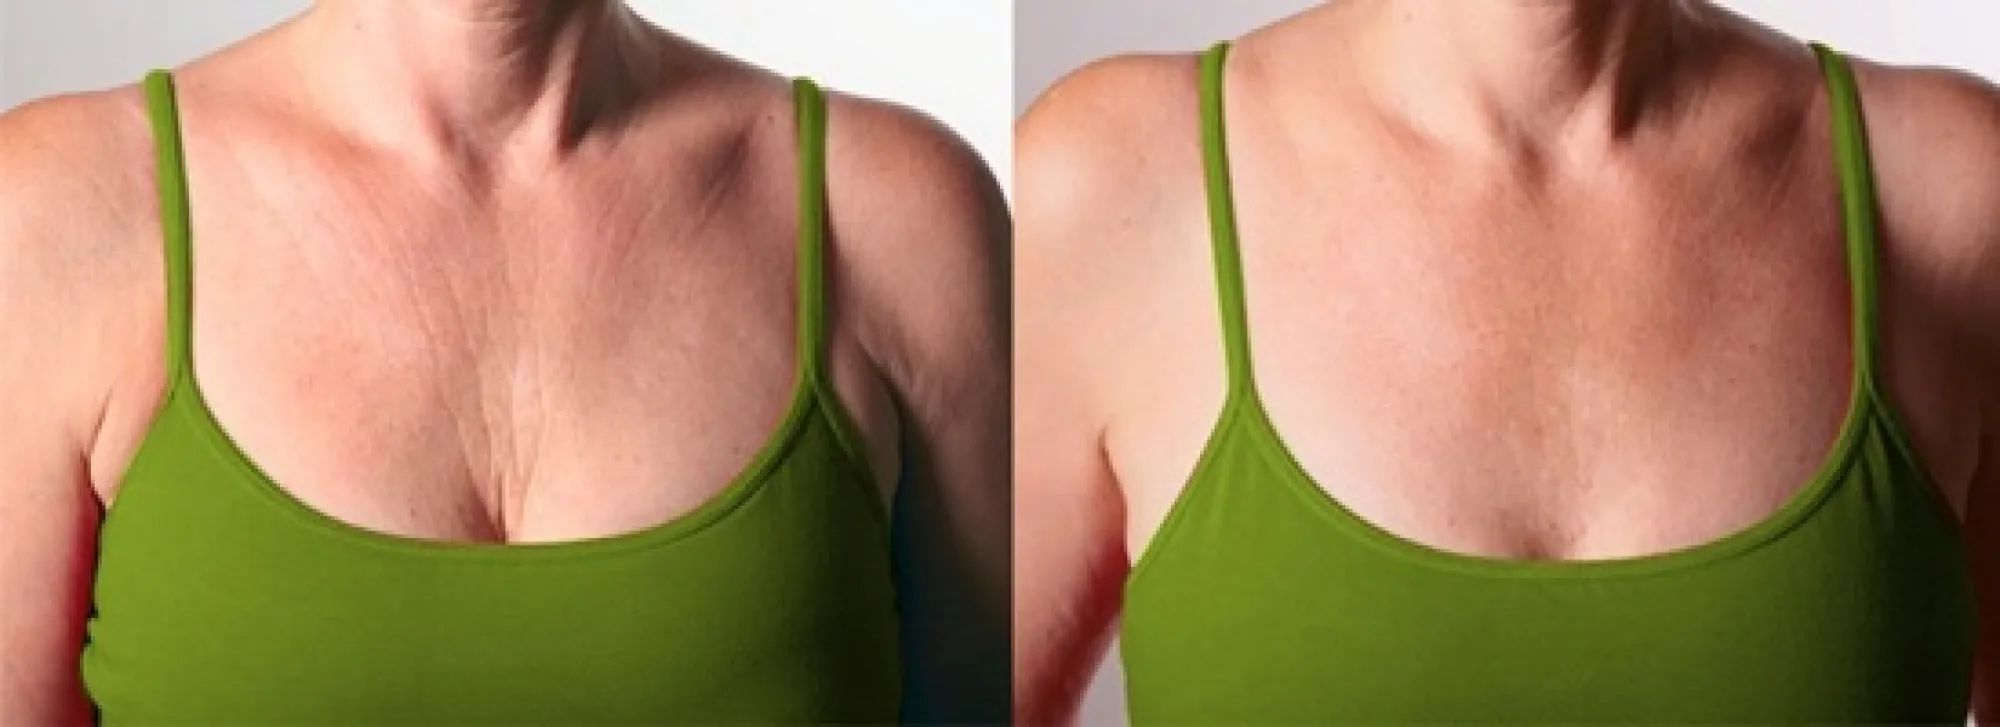 кожа на груди у женщин фото 17